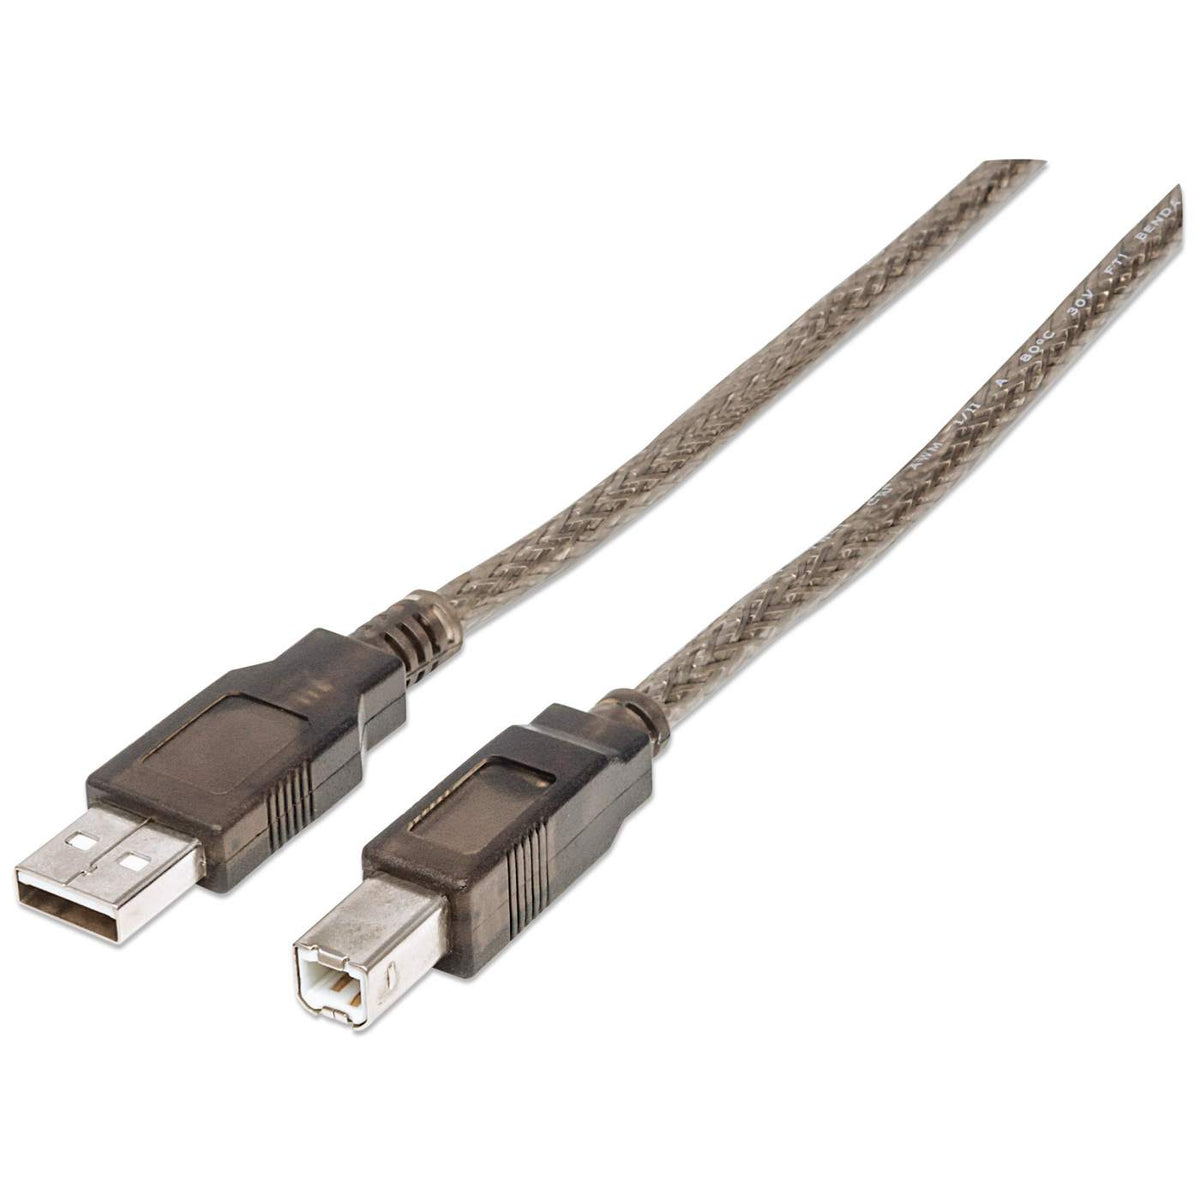 Manhattan USB 2.0 Cable (510424)